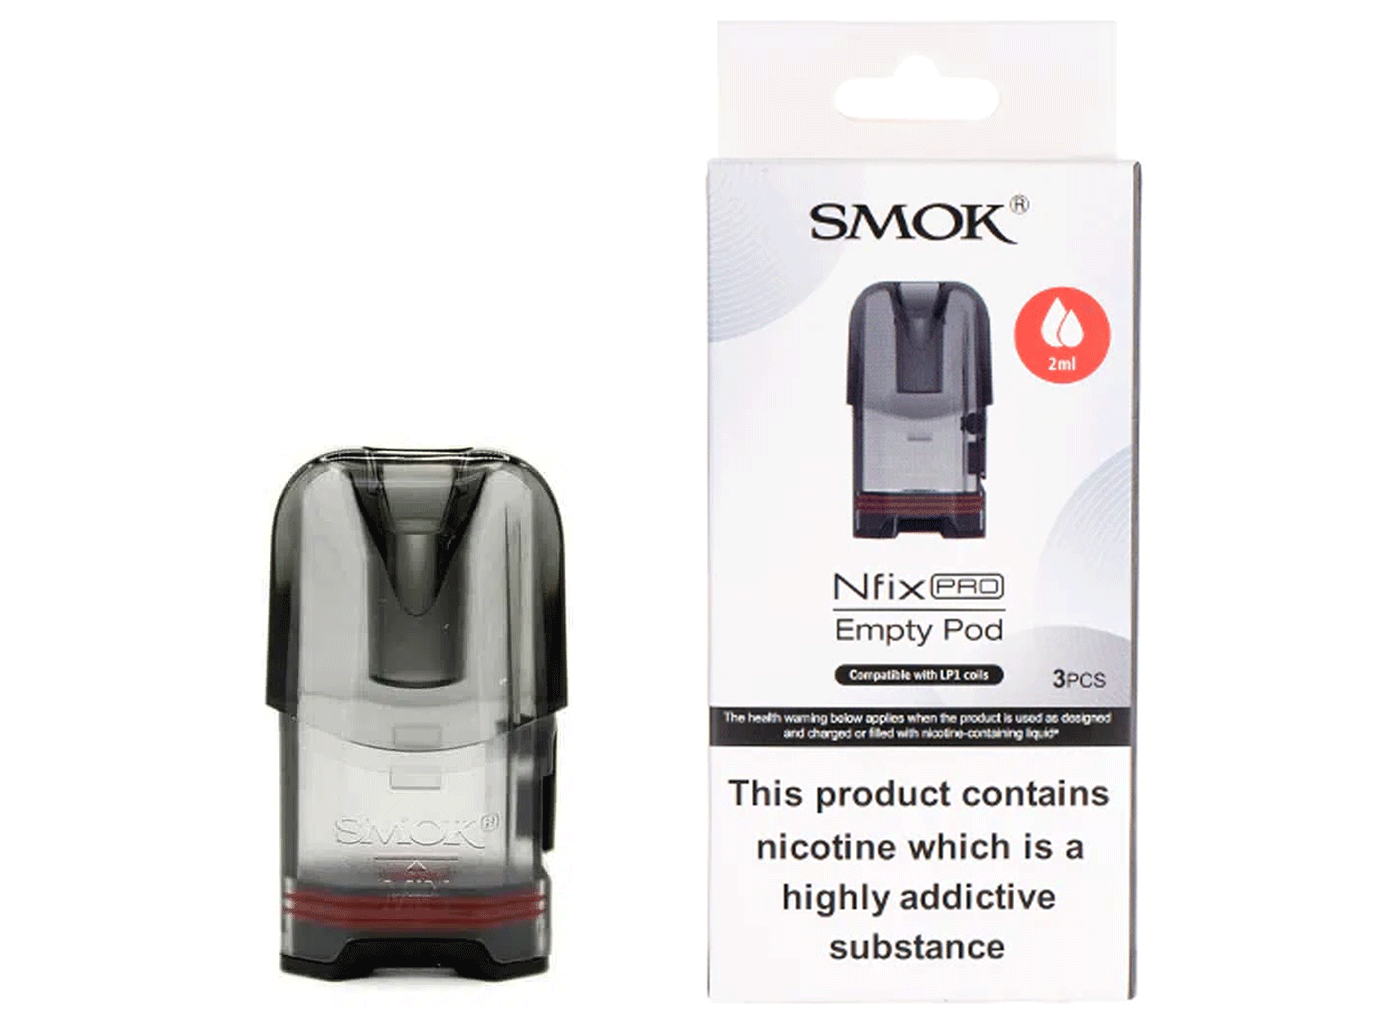 SMOK Nfix Pro Empty Replacement Pods 2ml Authentic Cartridge Fast Dispatch UK